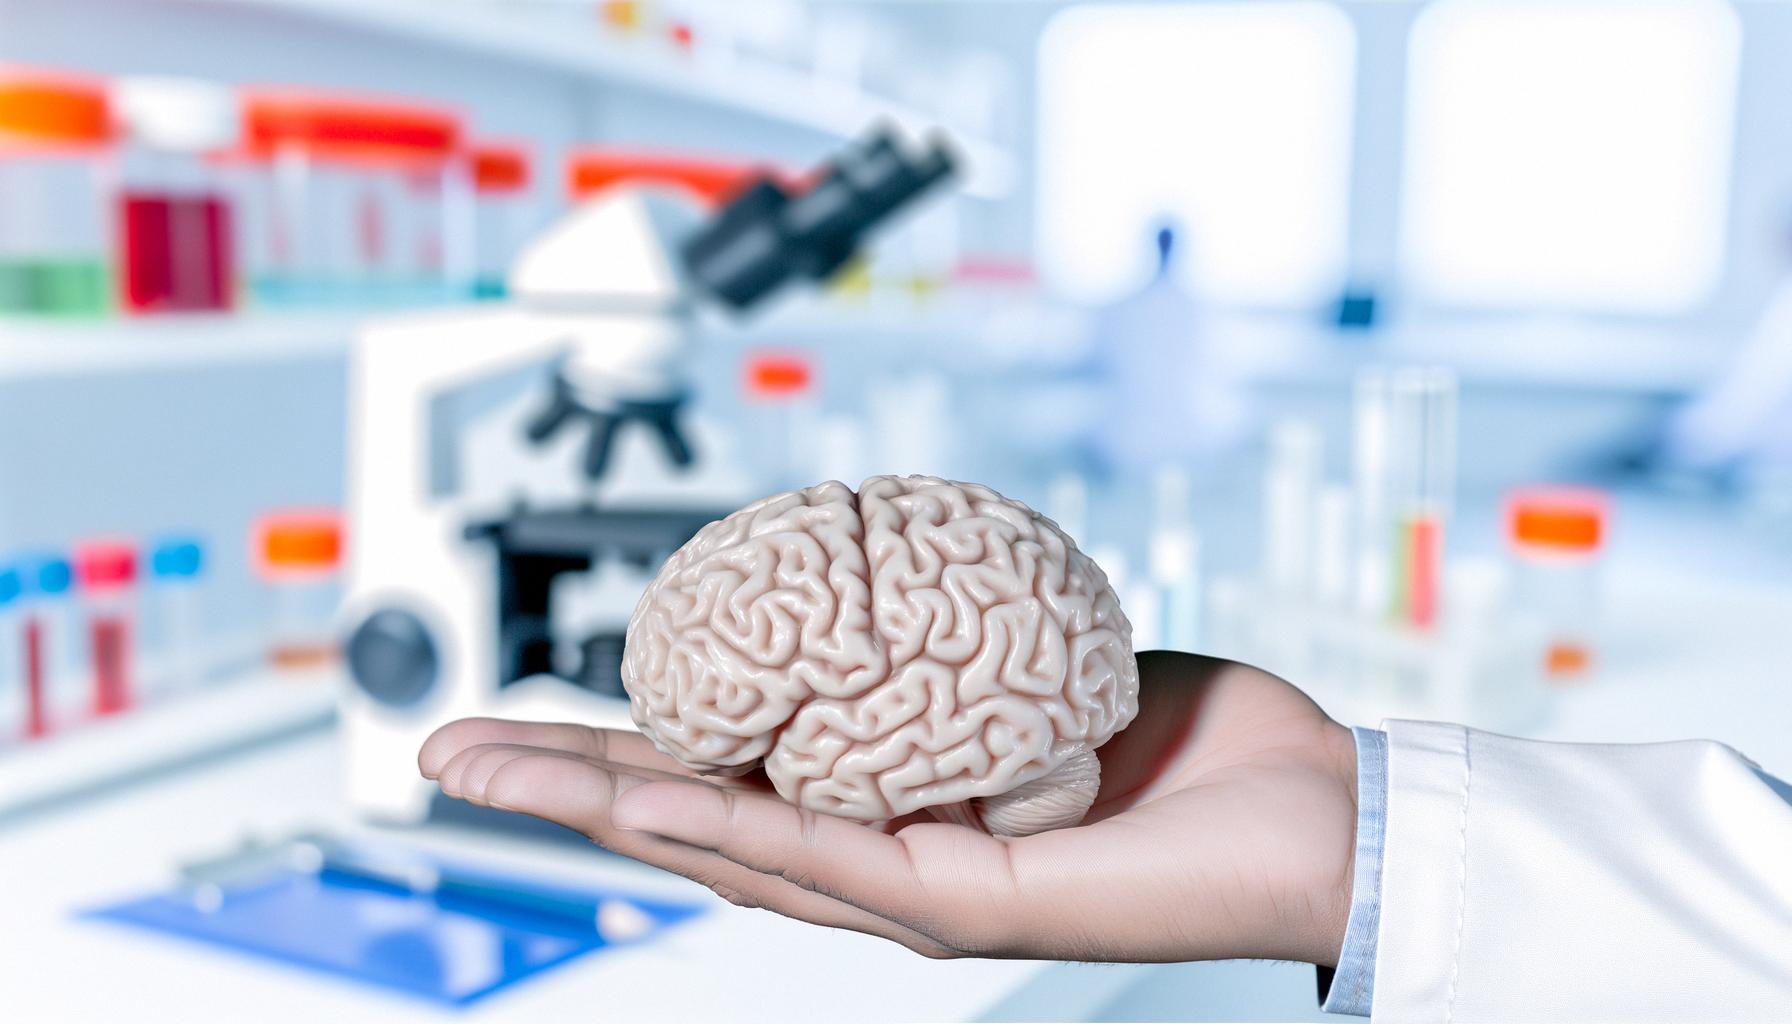 Mini human brain model grown